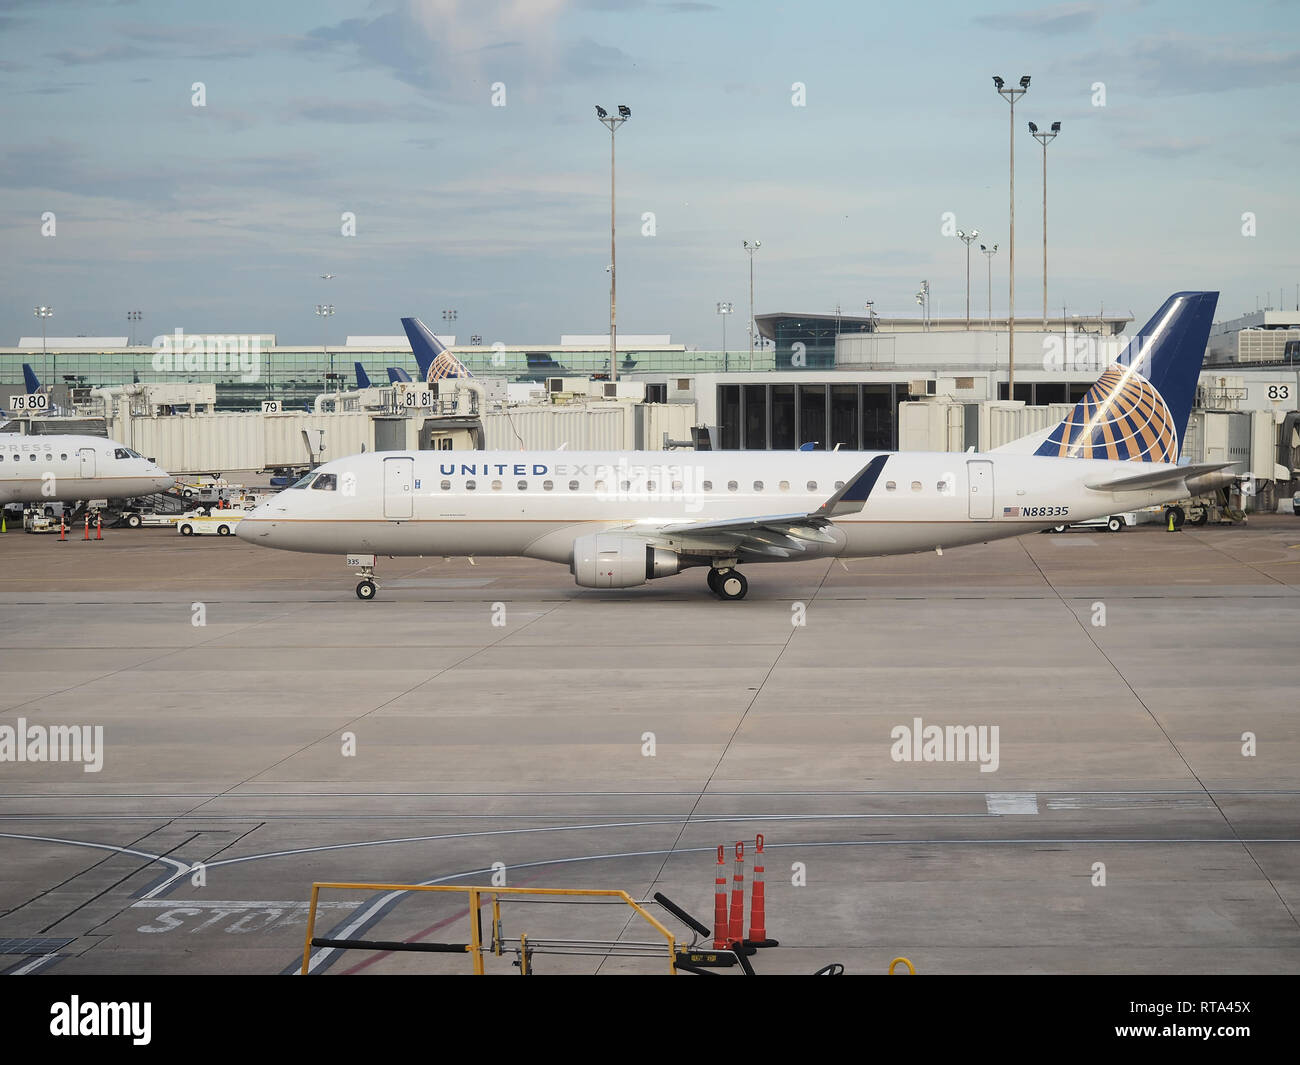 United Express plane on tarmac, George Bush Intercontinental Airport, Houston, Texas, United States, September 2018 Stock Photo